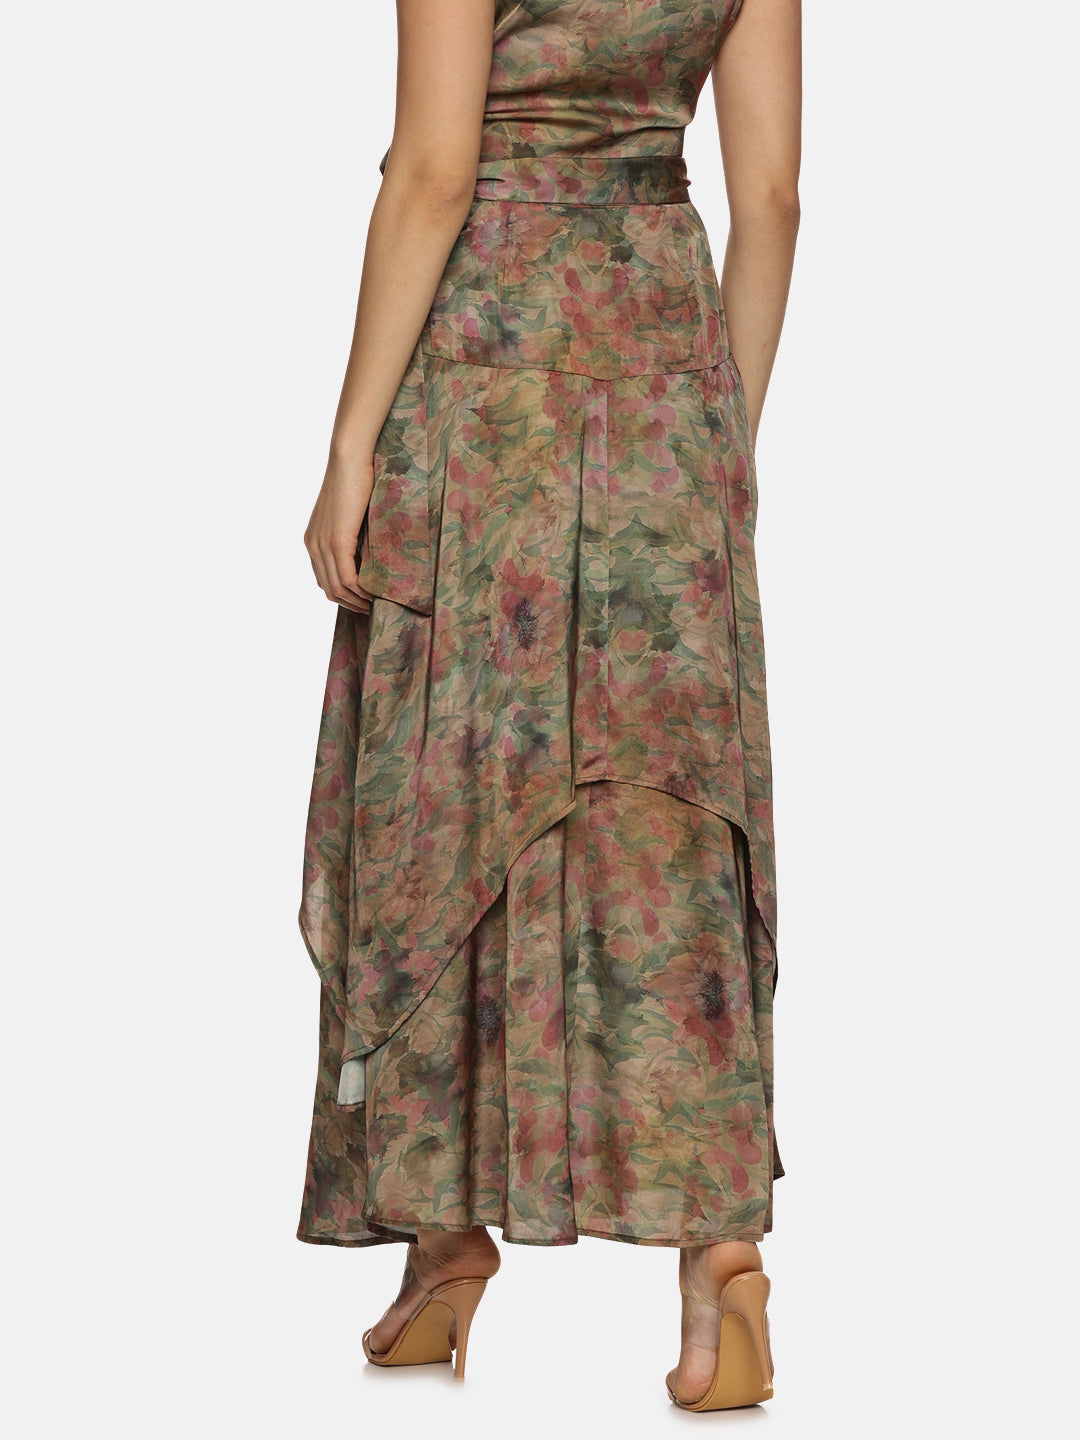 IS.U Floral Brown Asymmetrical Flare Maxi Skirt